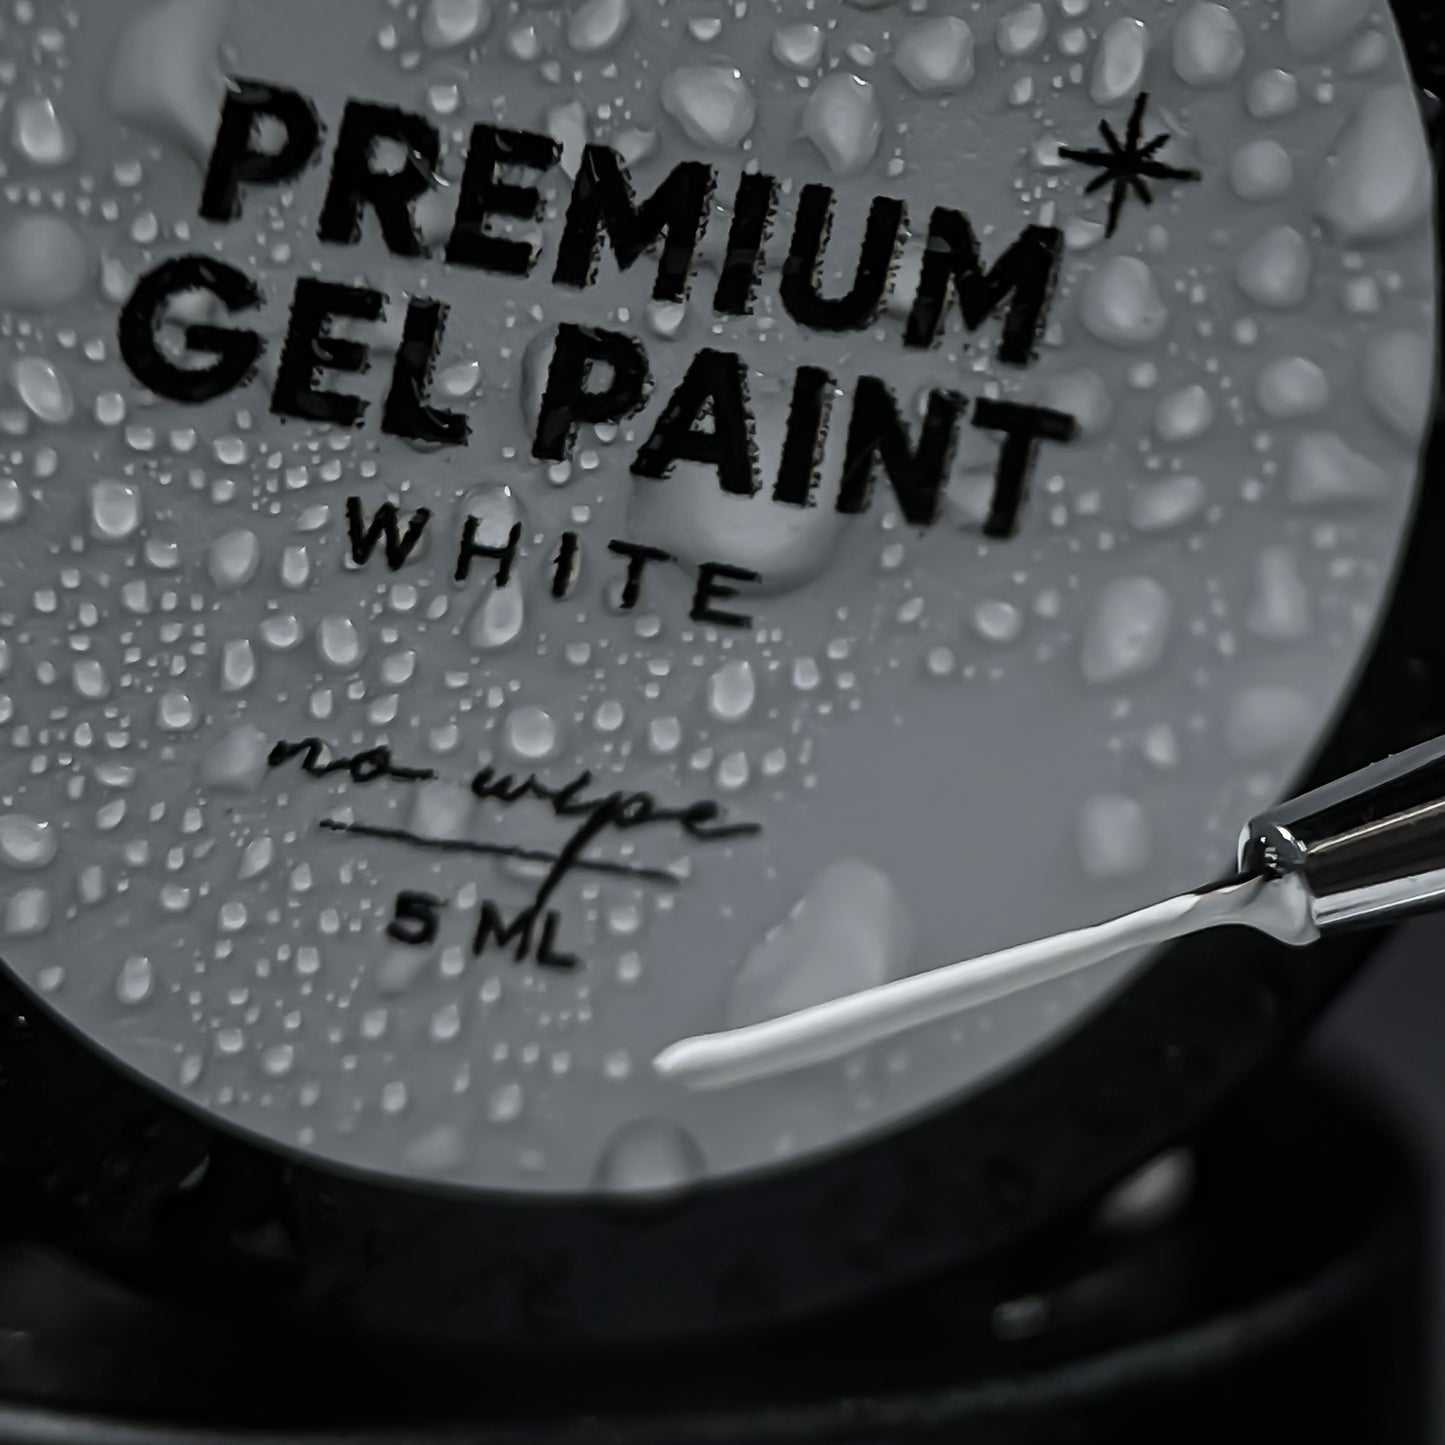 Premium gel paint White No wipe 5 ml NAILSOFTHEDAY